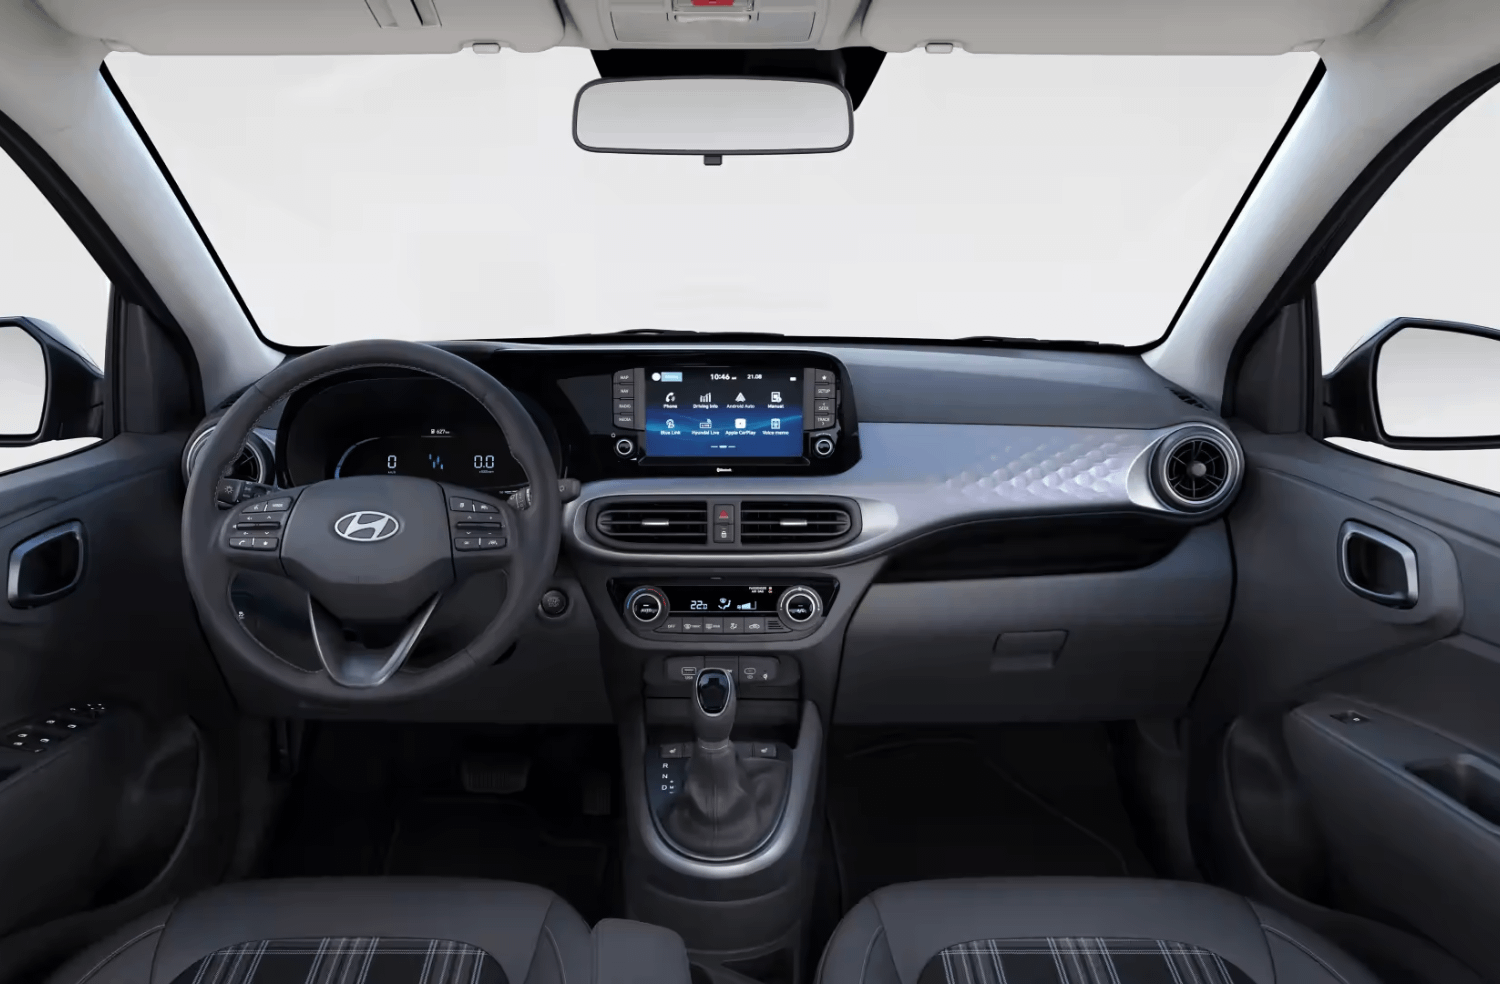 Hyundai i10 Interior